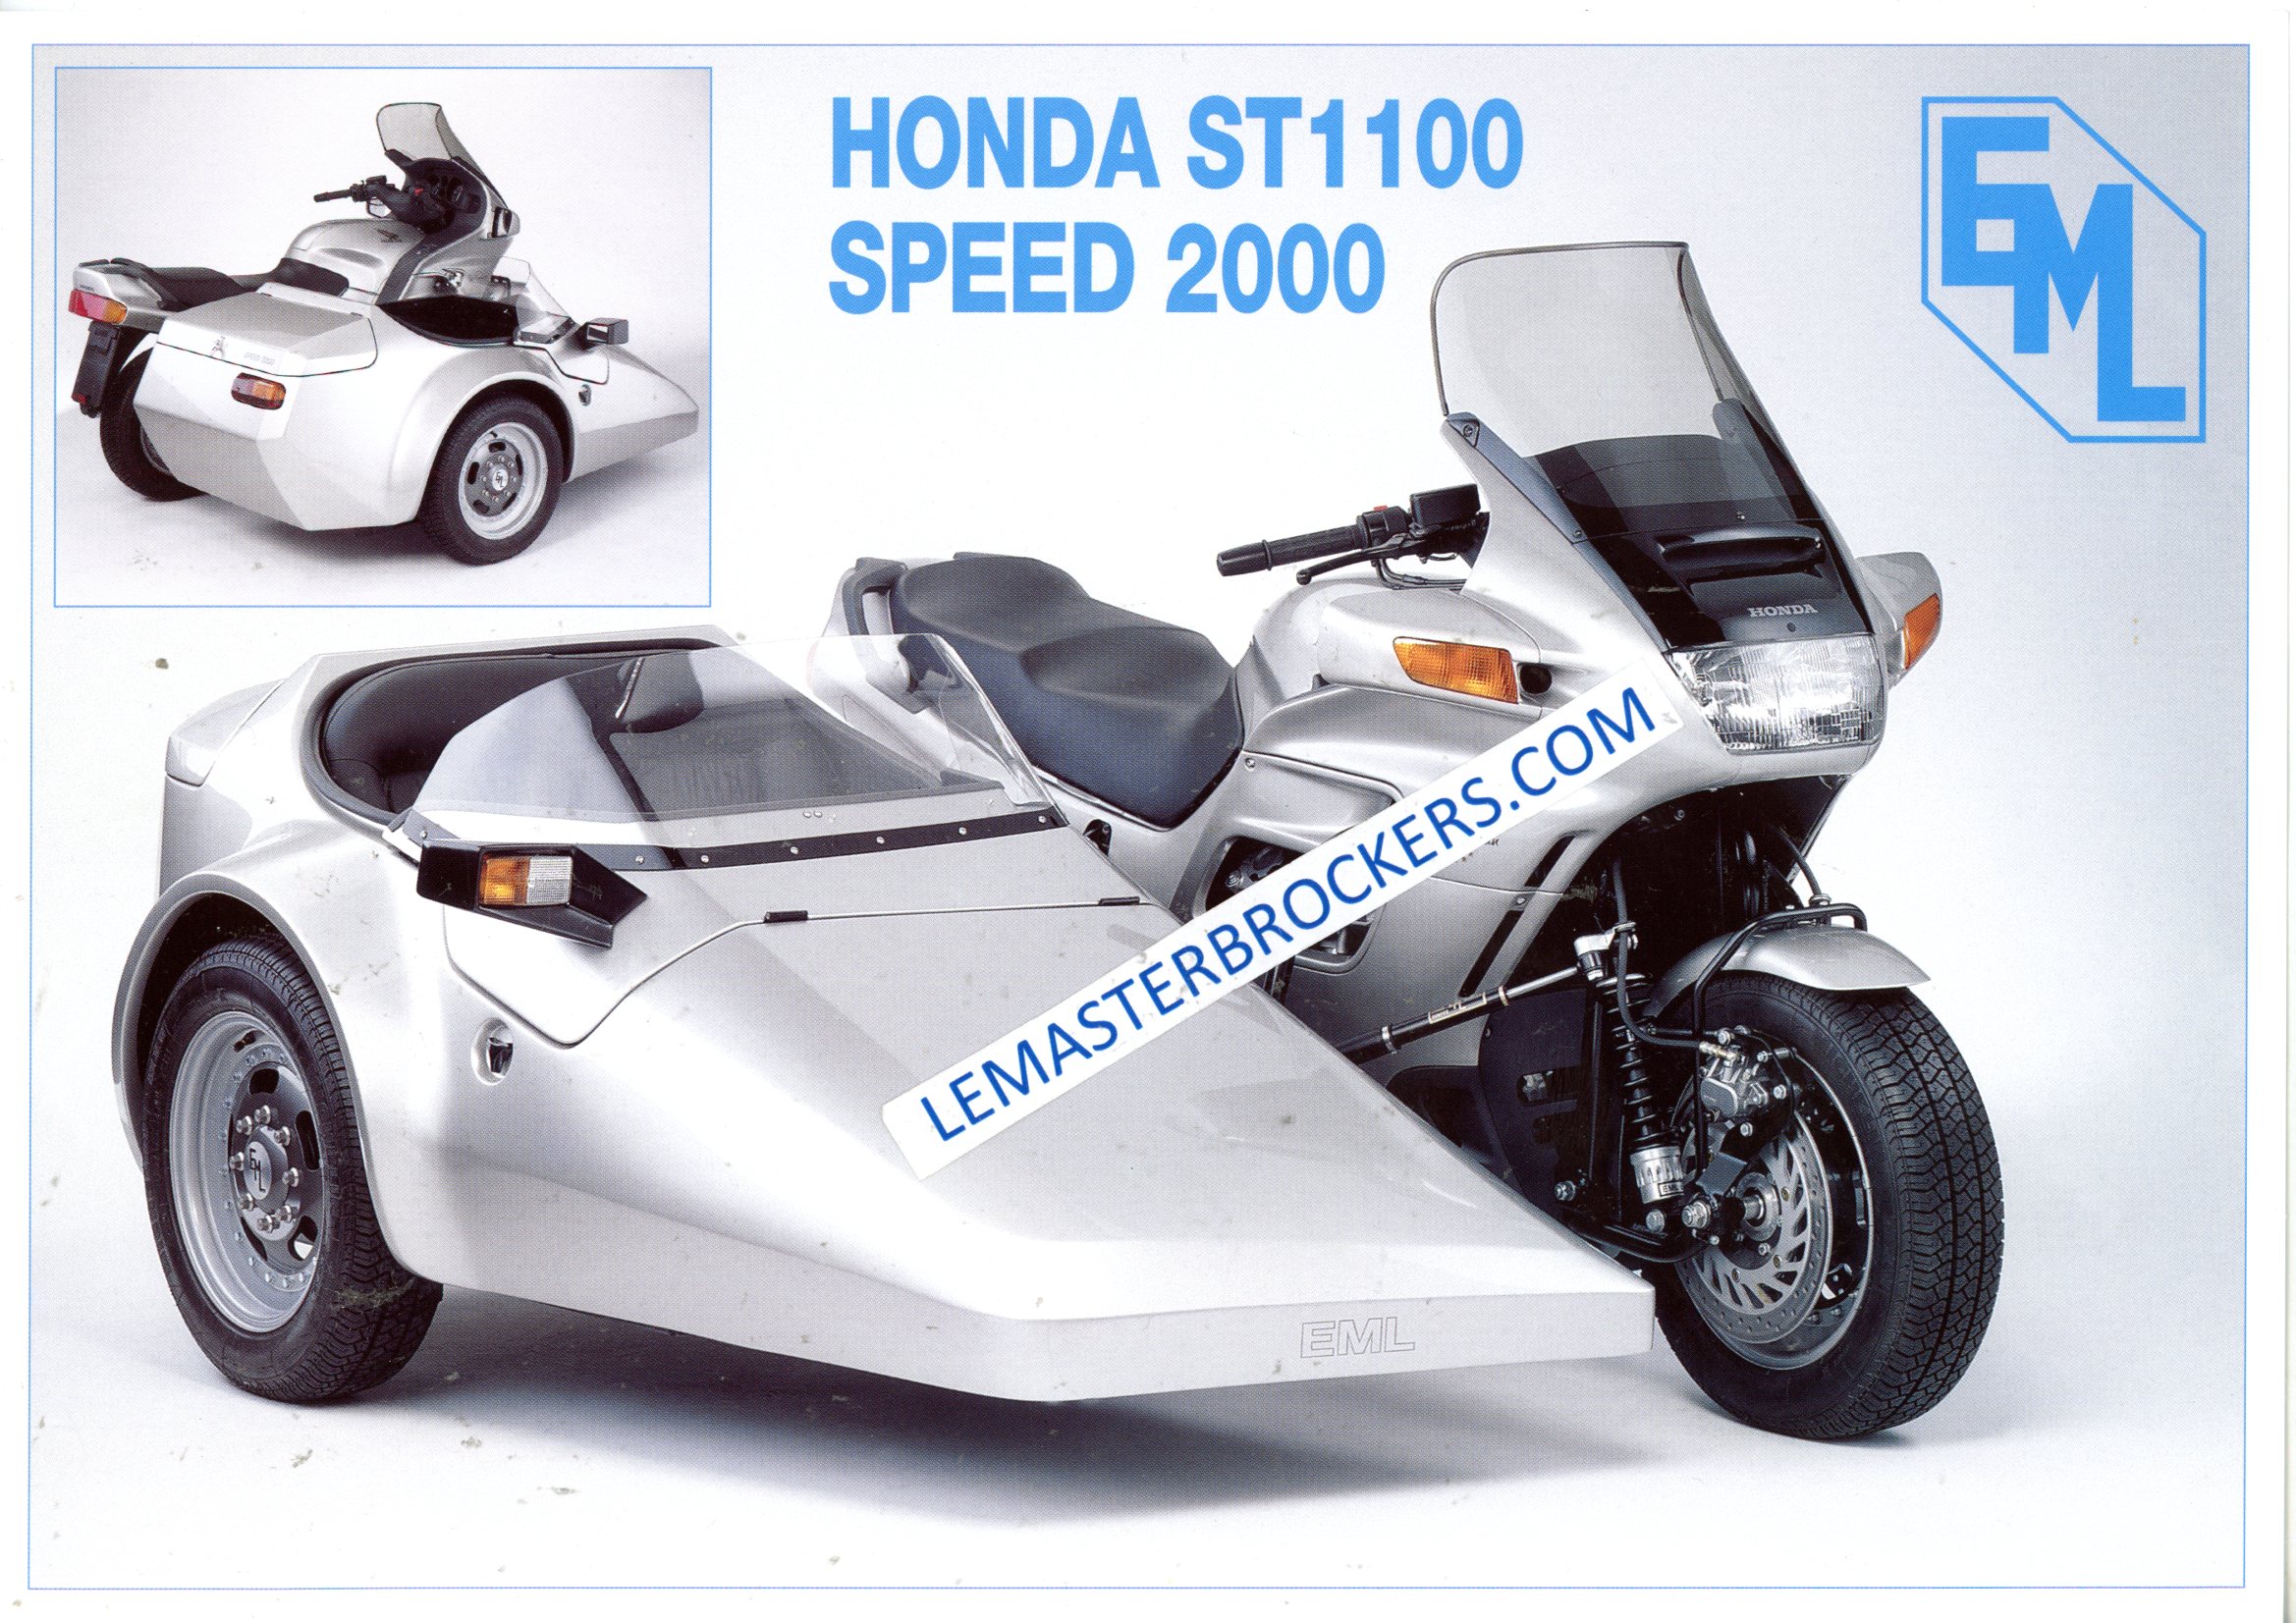 HONDA ST1100 SPEED 2000 SIDE-CAR EML